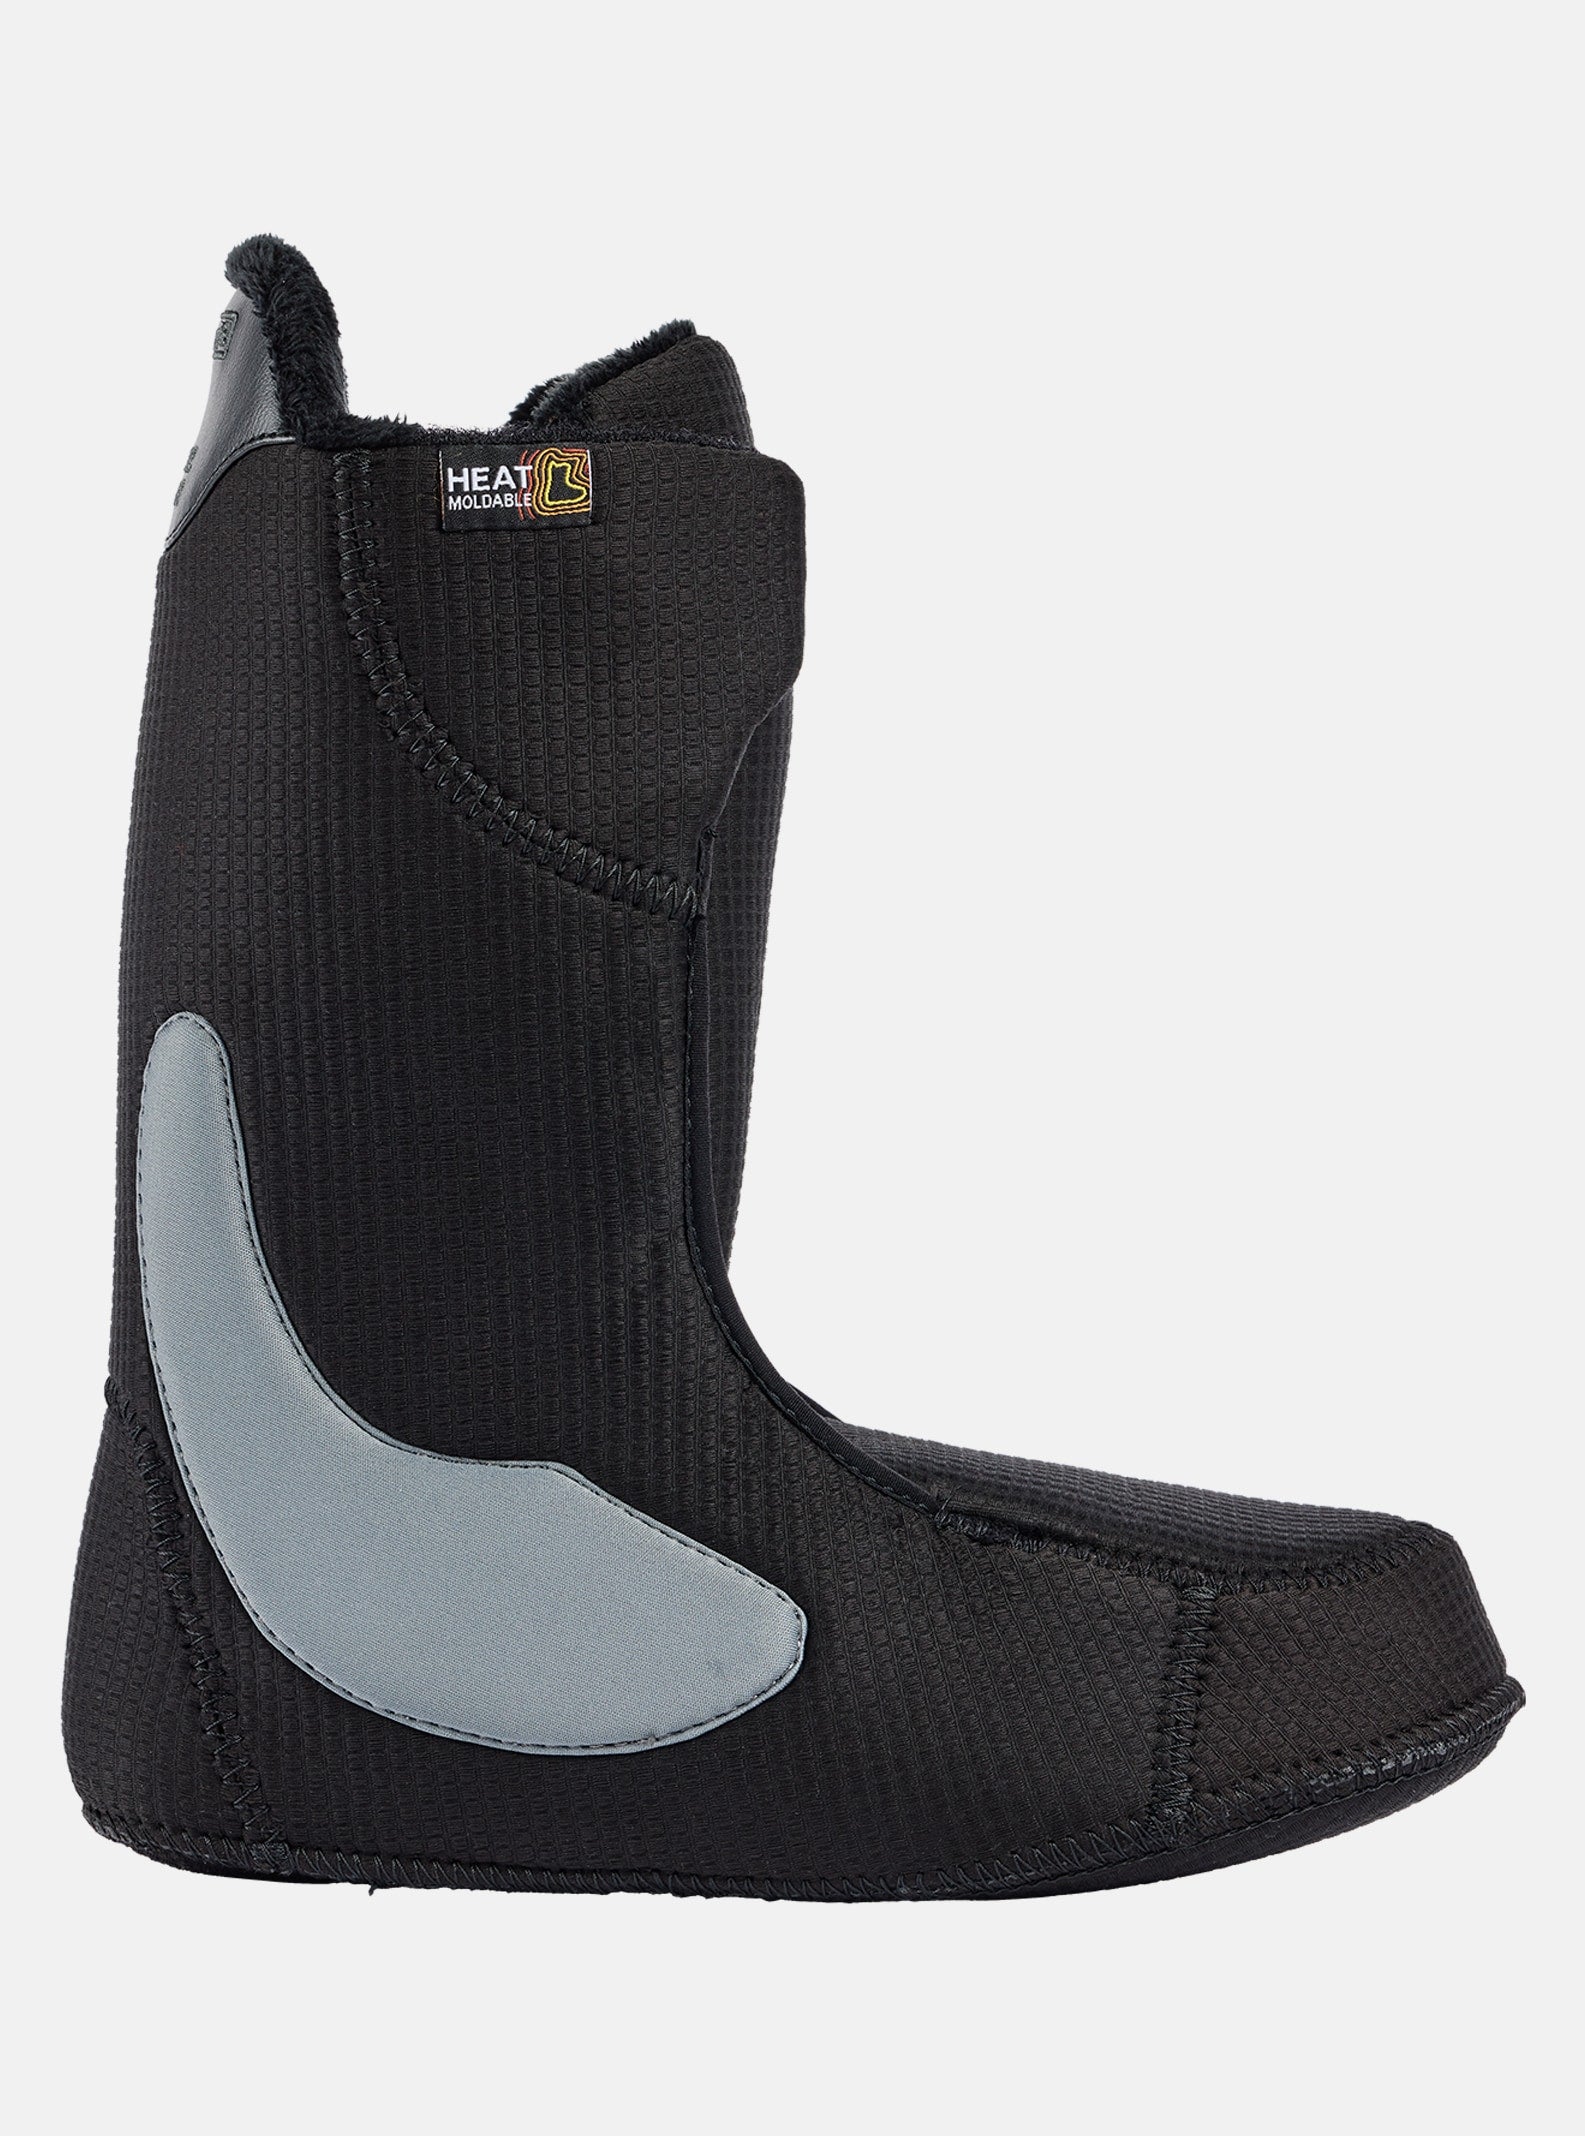 Men's Ruler BOA® Snowboard Boots, Almandine